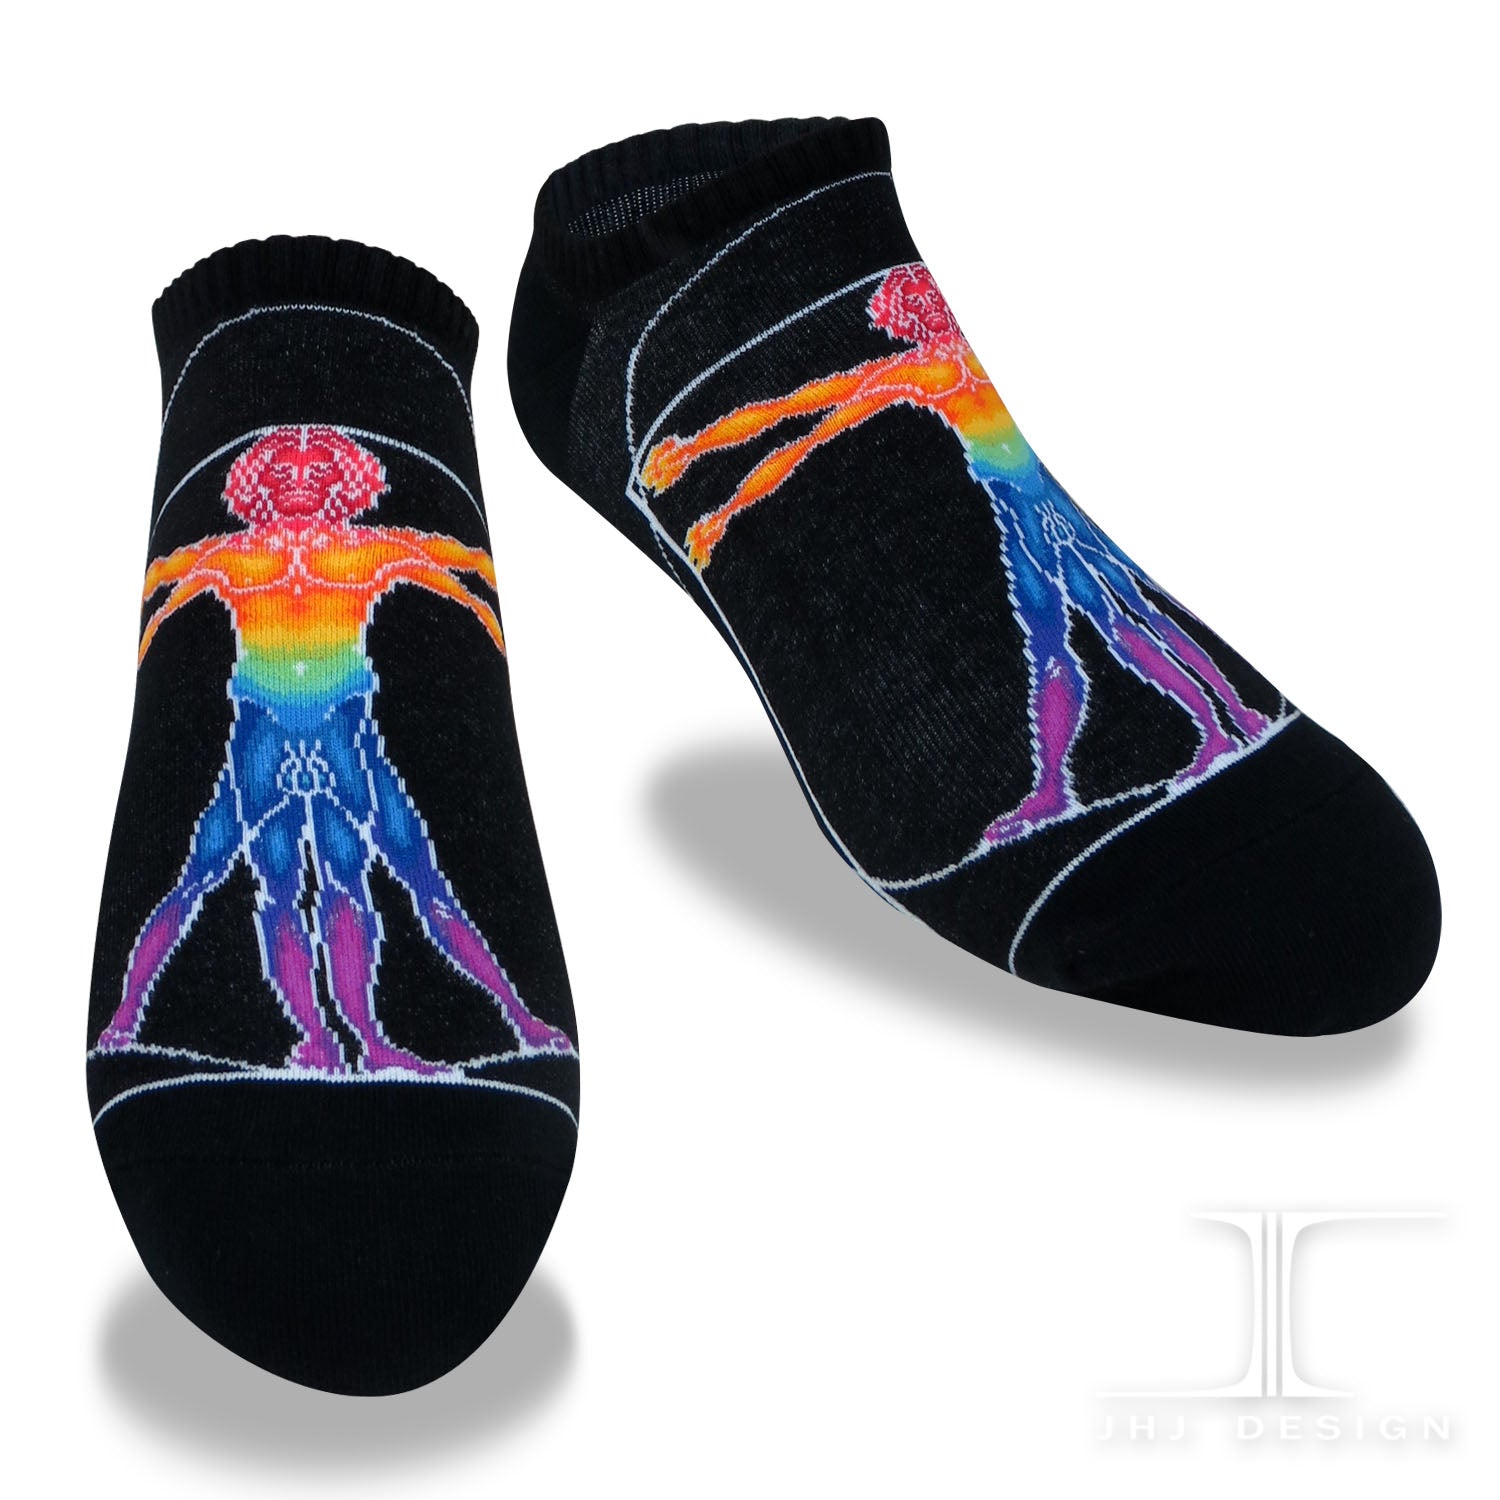 Masterpiece Ankles - Vitruvian Man